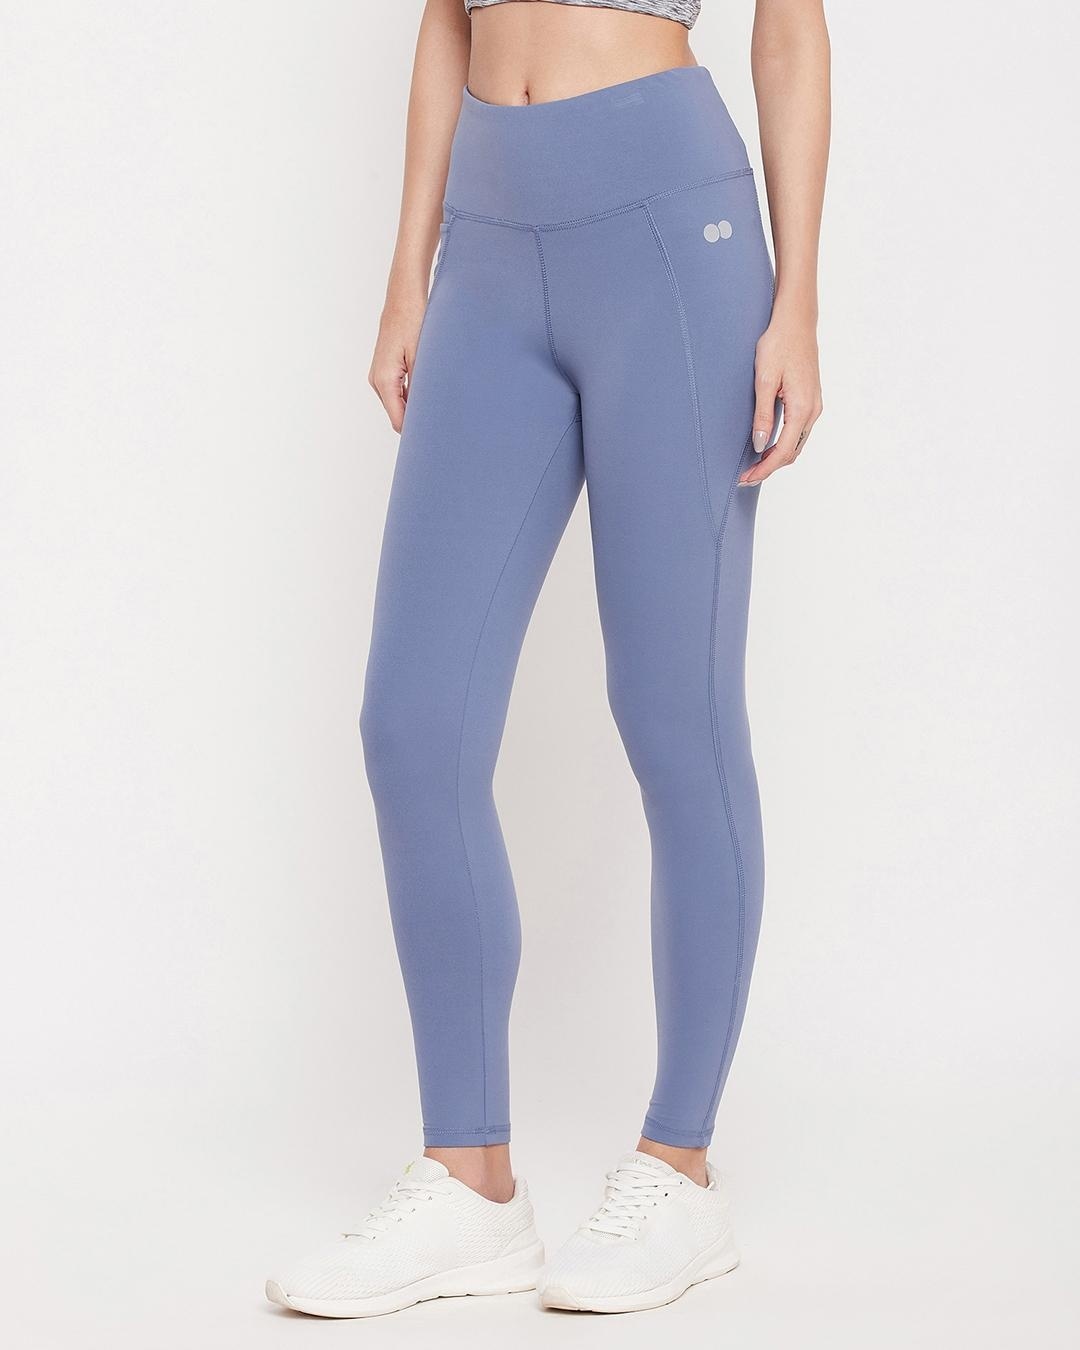 Shop Women's Blue Slim Fit Activewear Tights-Back